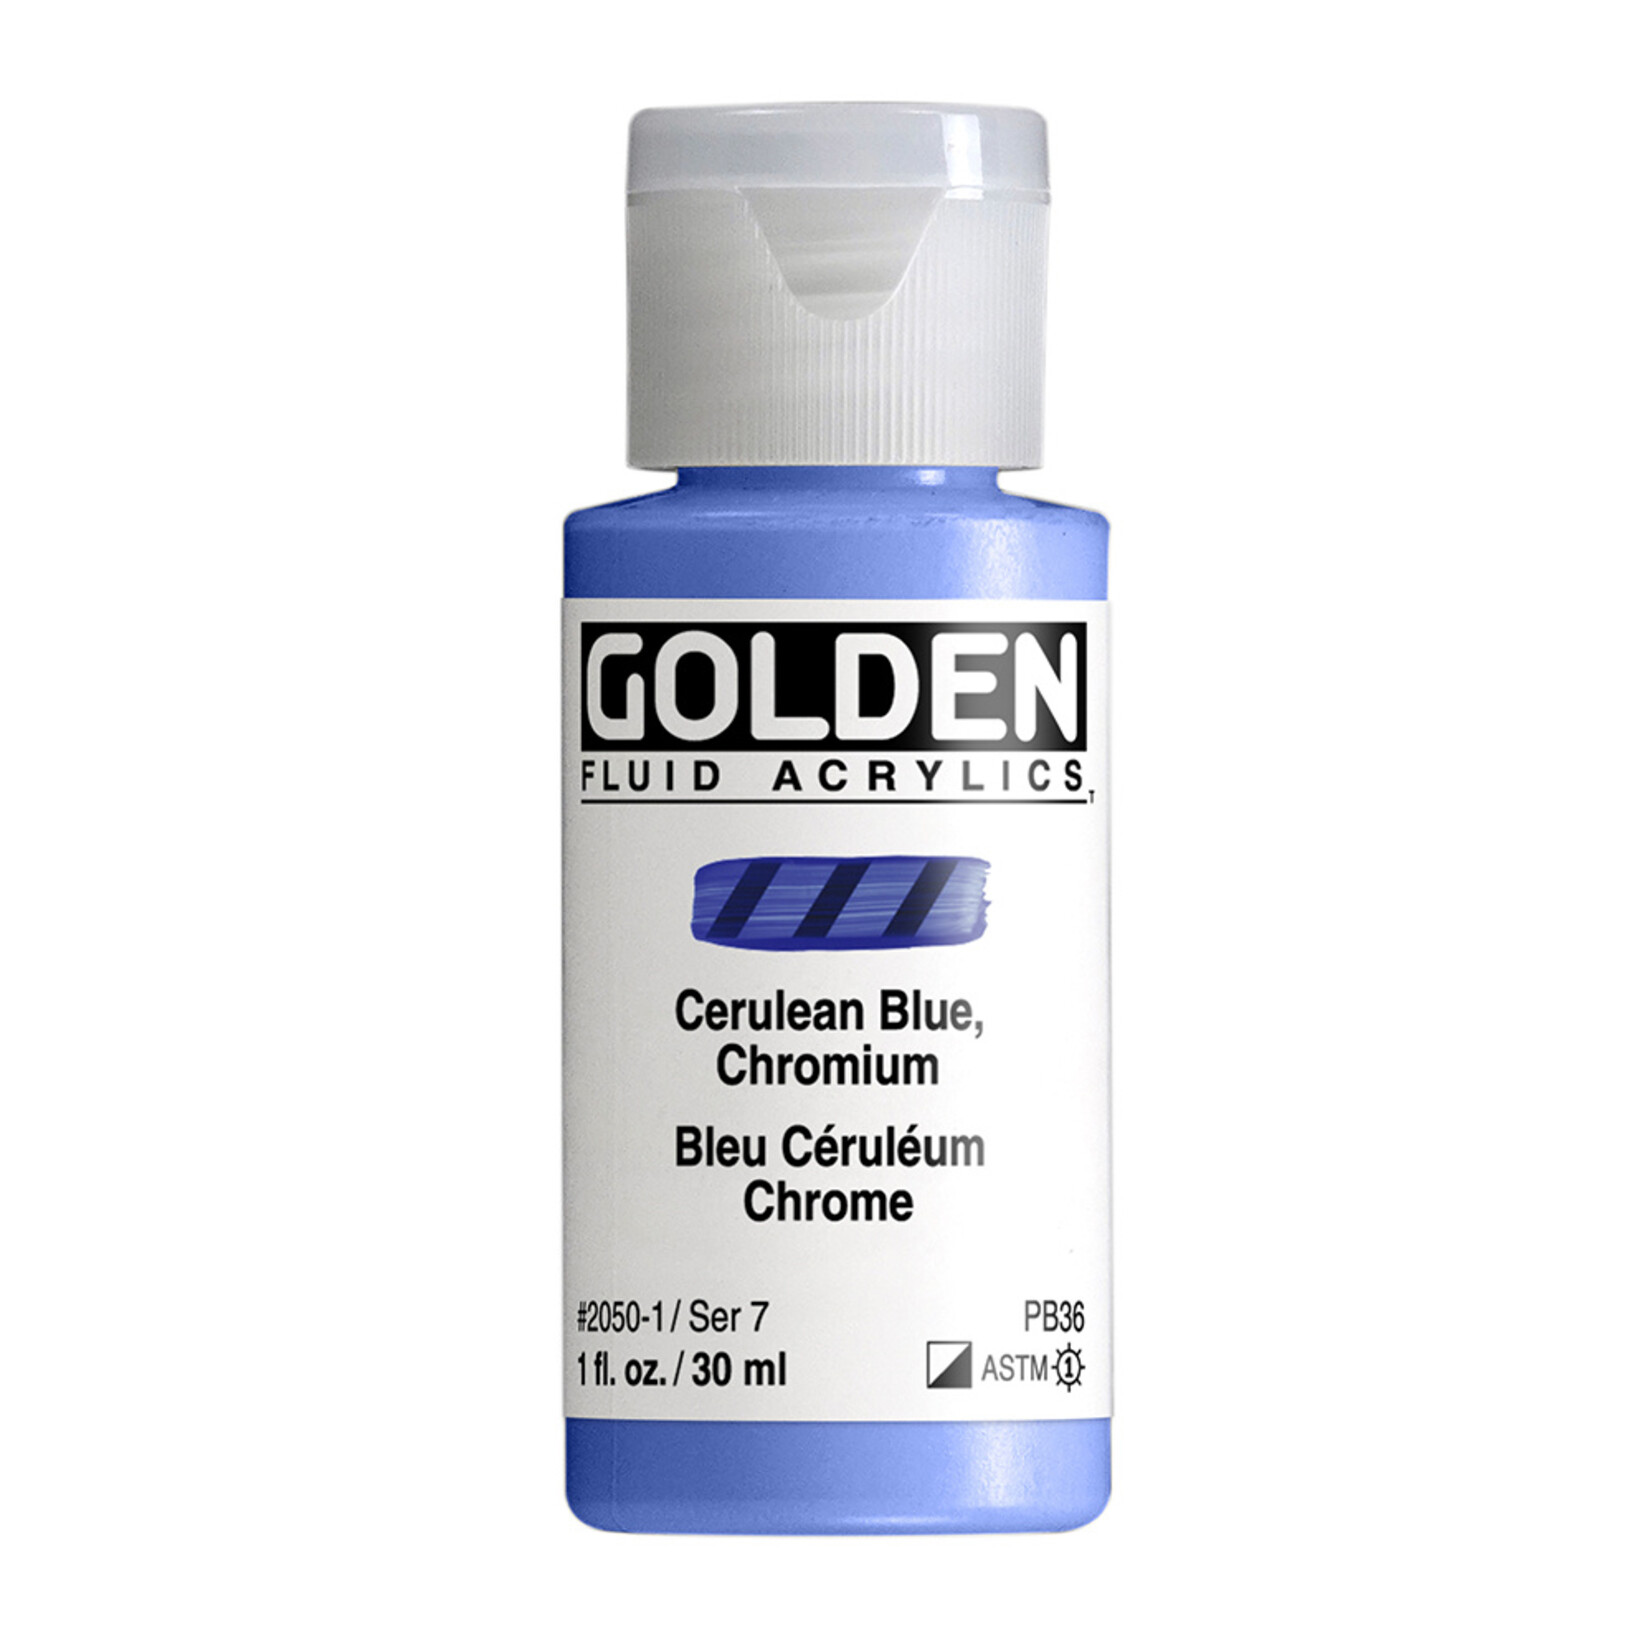 GOLDEN GOLDEN FLUID ACRYLIC 1OZ CERULEAN BLUE CHROMIUM